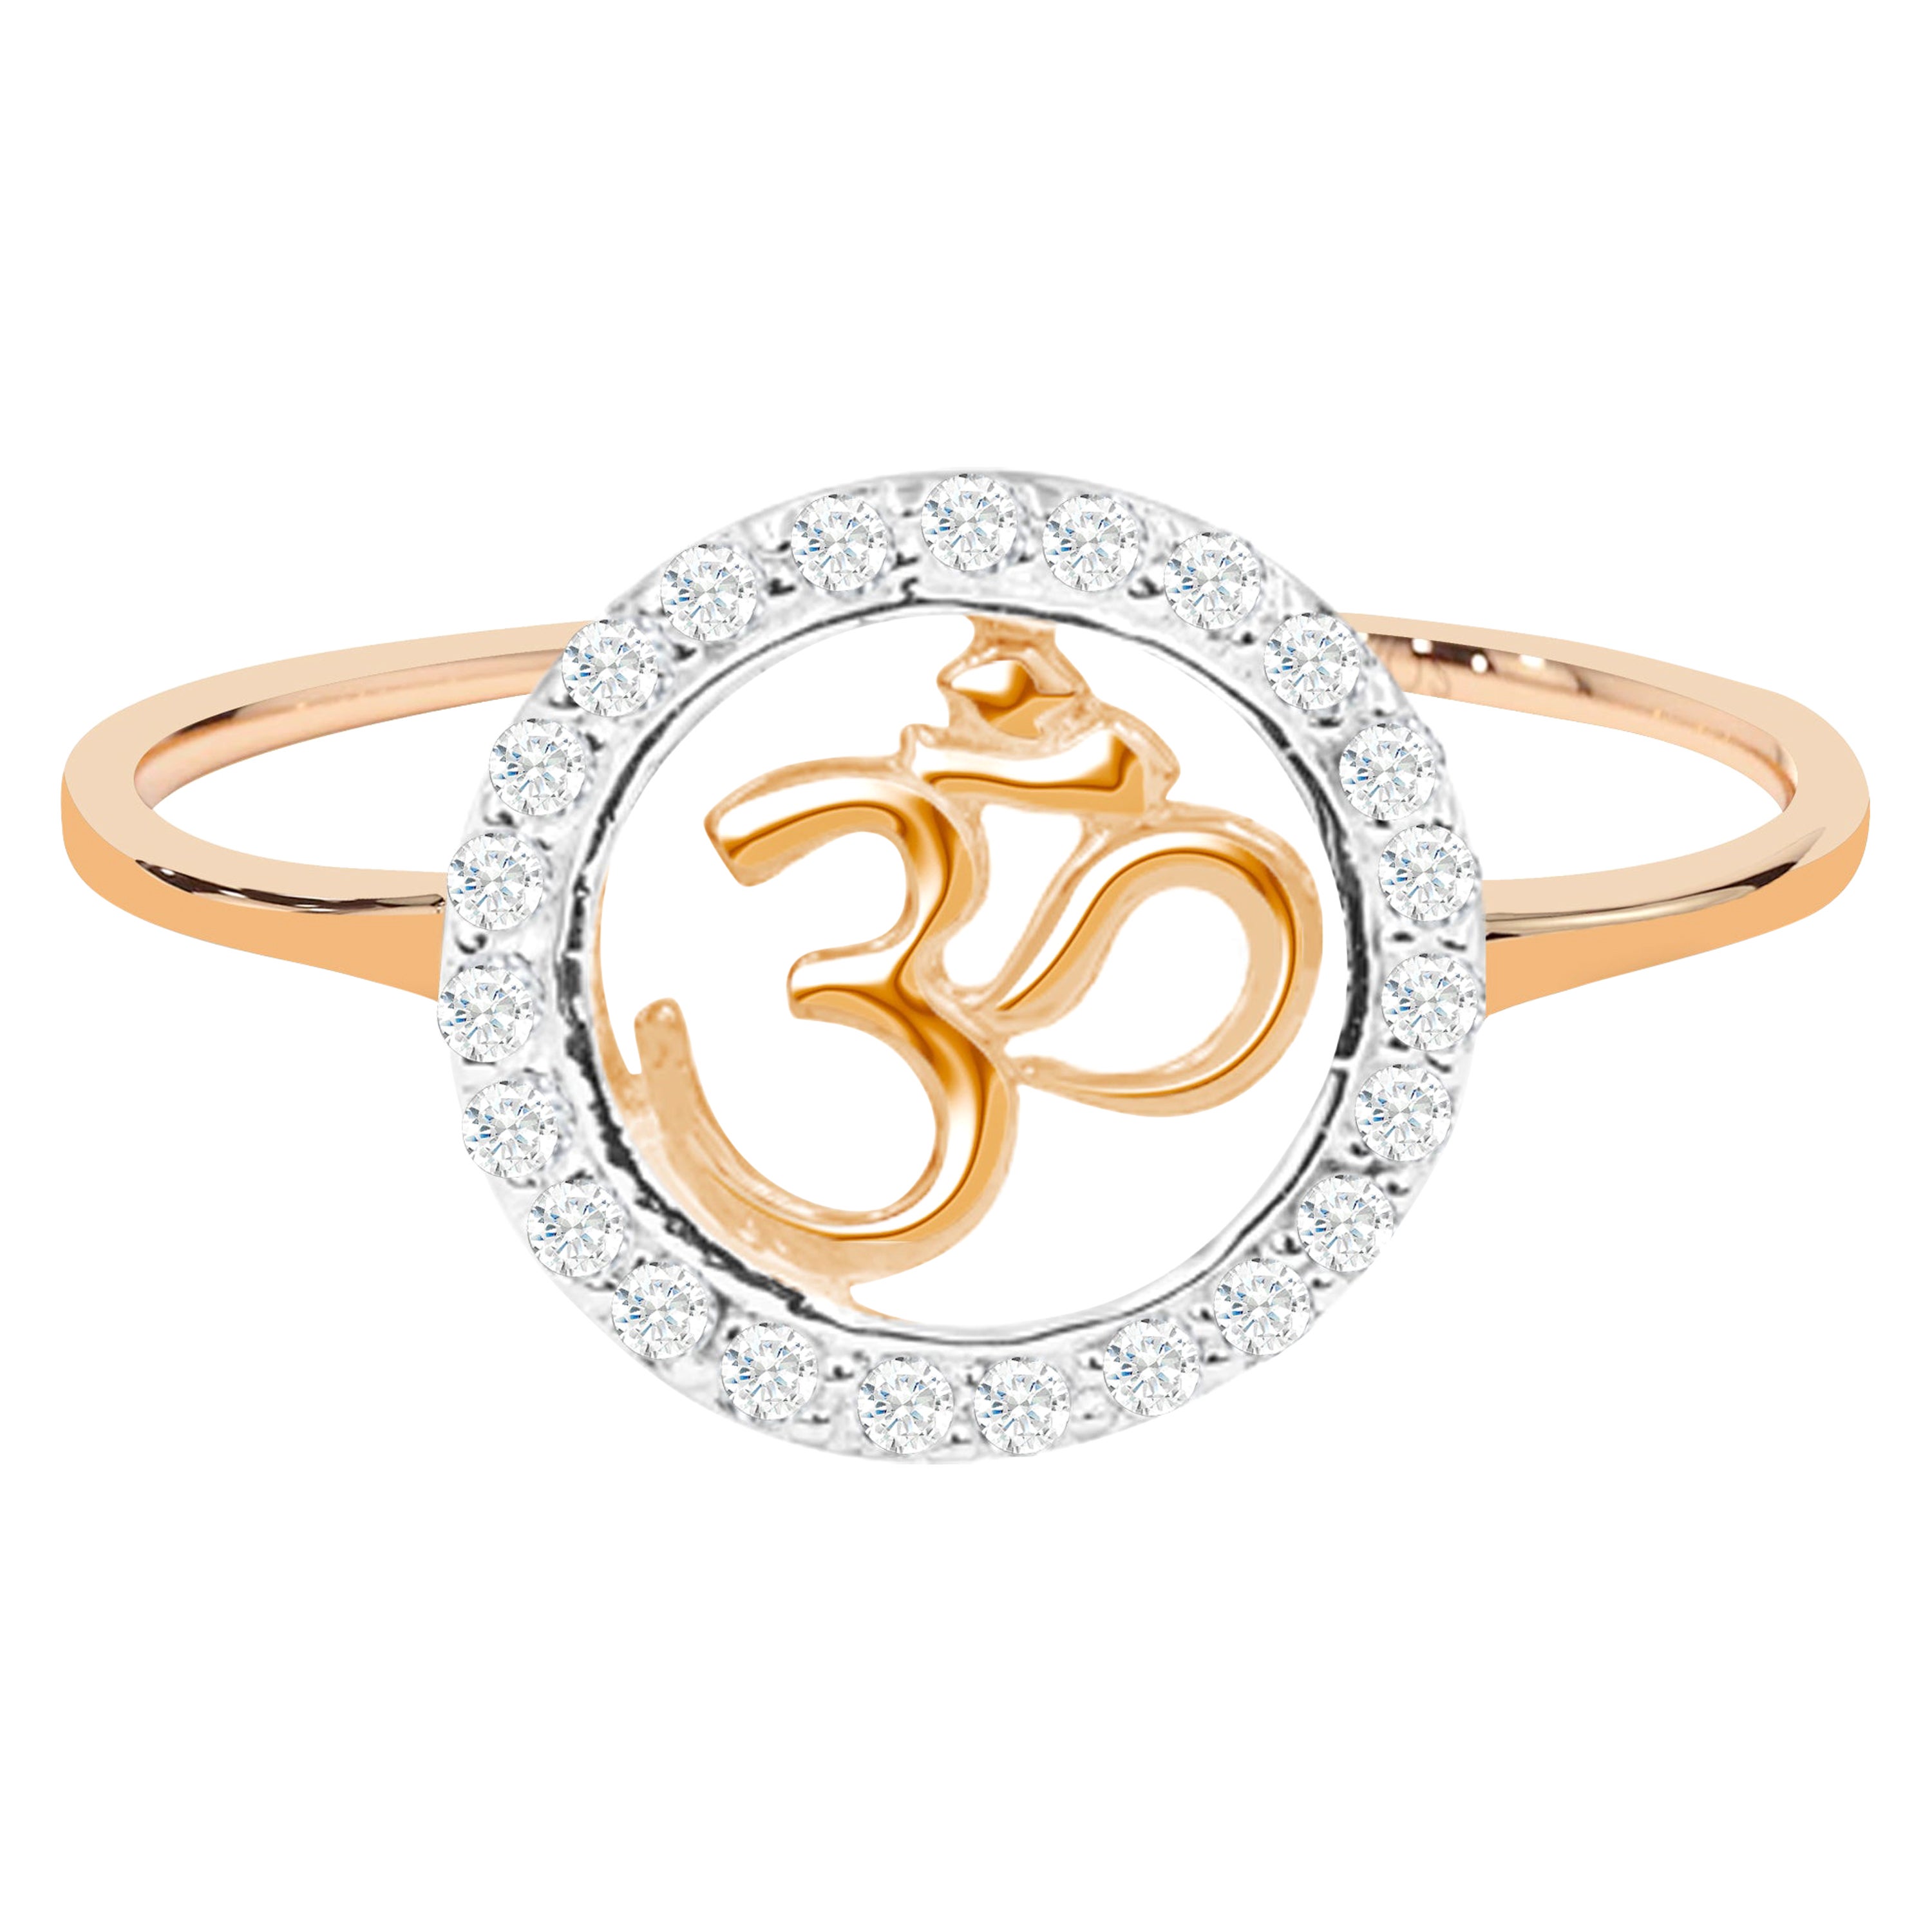 En vente :  Bague religieuse hindoue en or 14 carats avec halo de diamants 0,19 carat